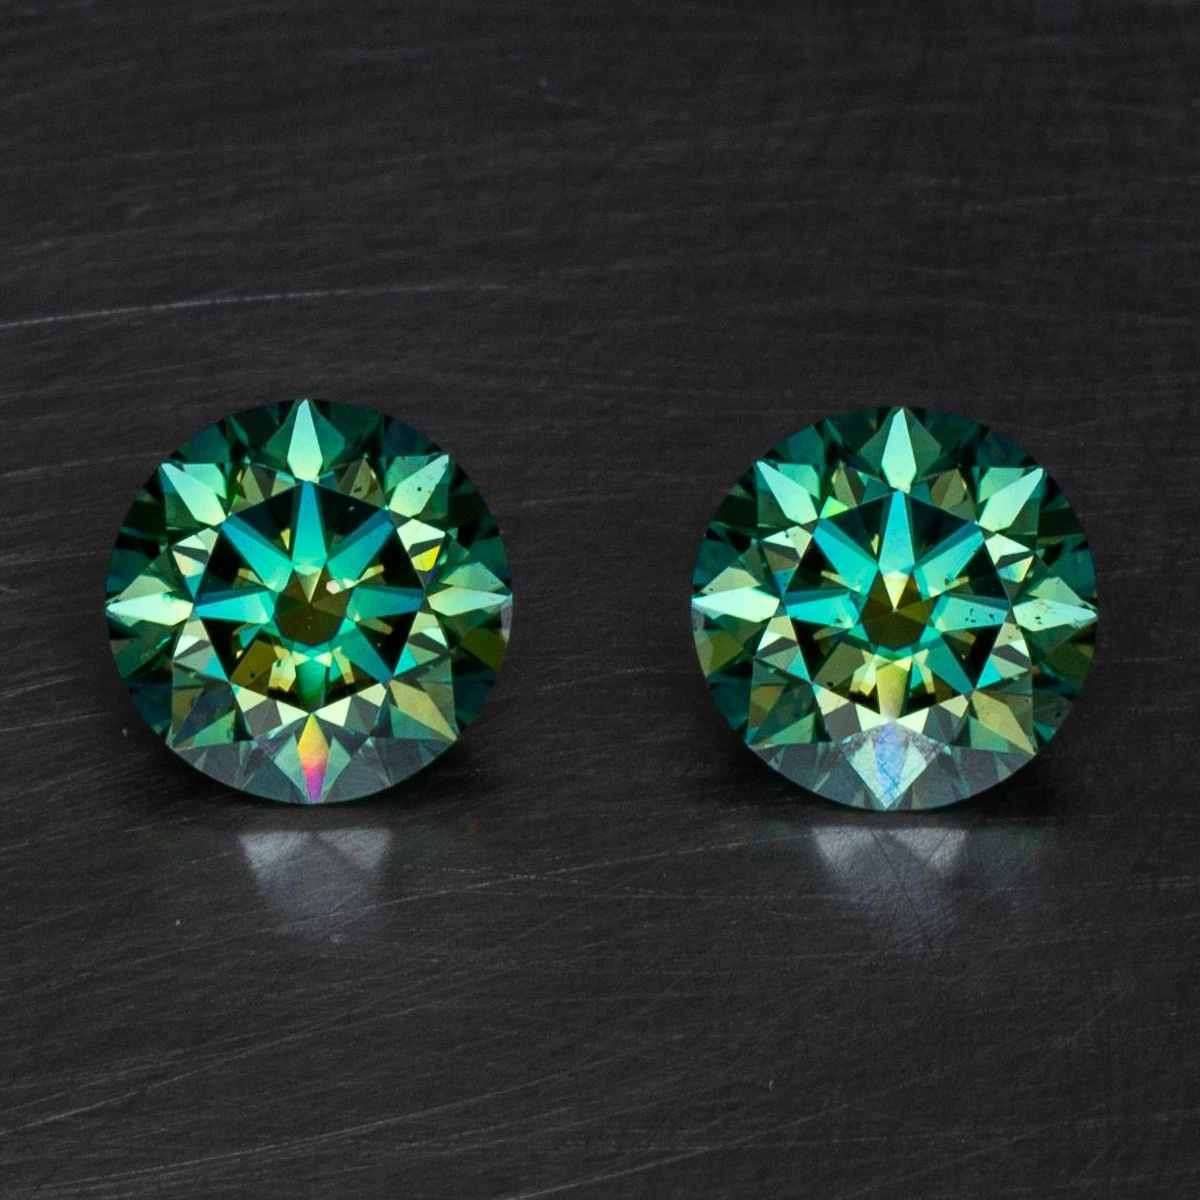 
Wuzhou wholesale green color round cut diamond moissanite loose gemstone jewelry ring  (1600236988510)